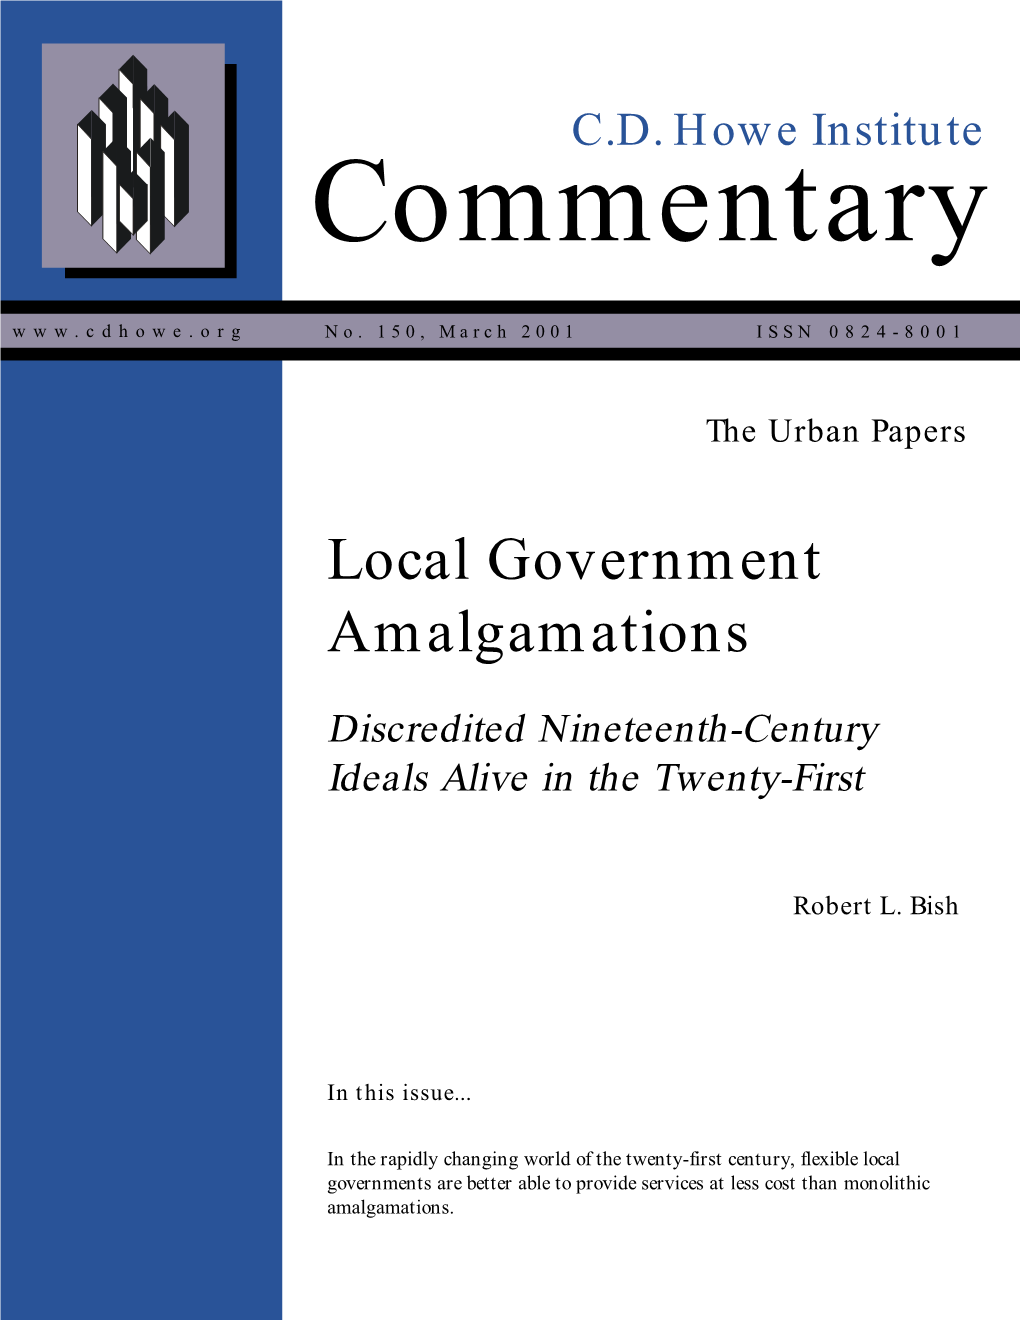 Local Government Amalgamations